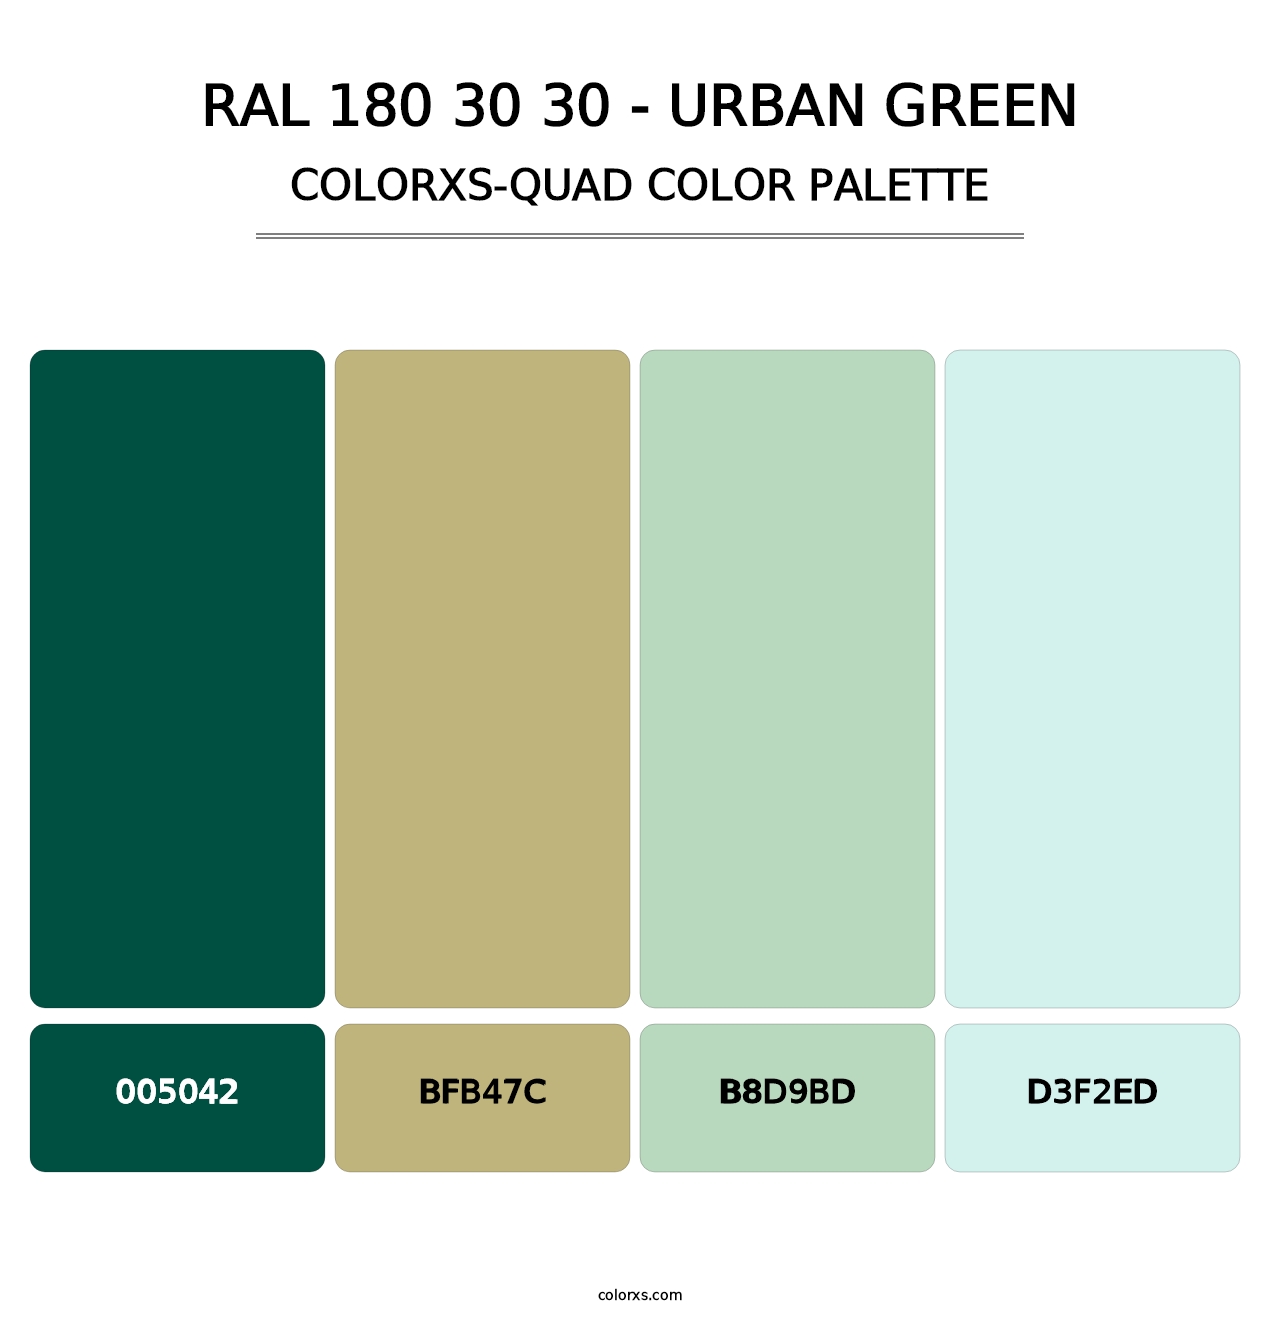 RAL 180 30 30 - Urban Green - Colorxs Quad Palette